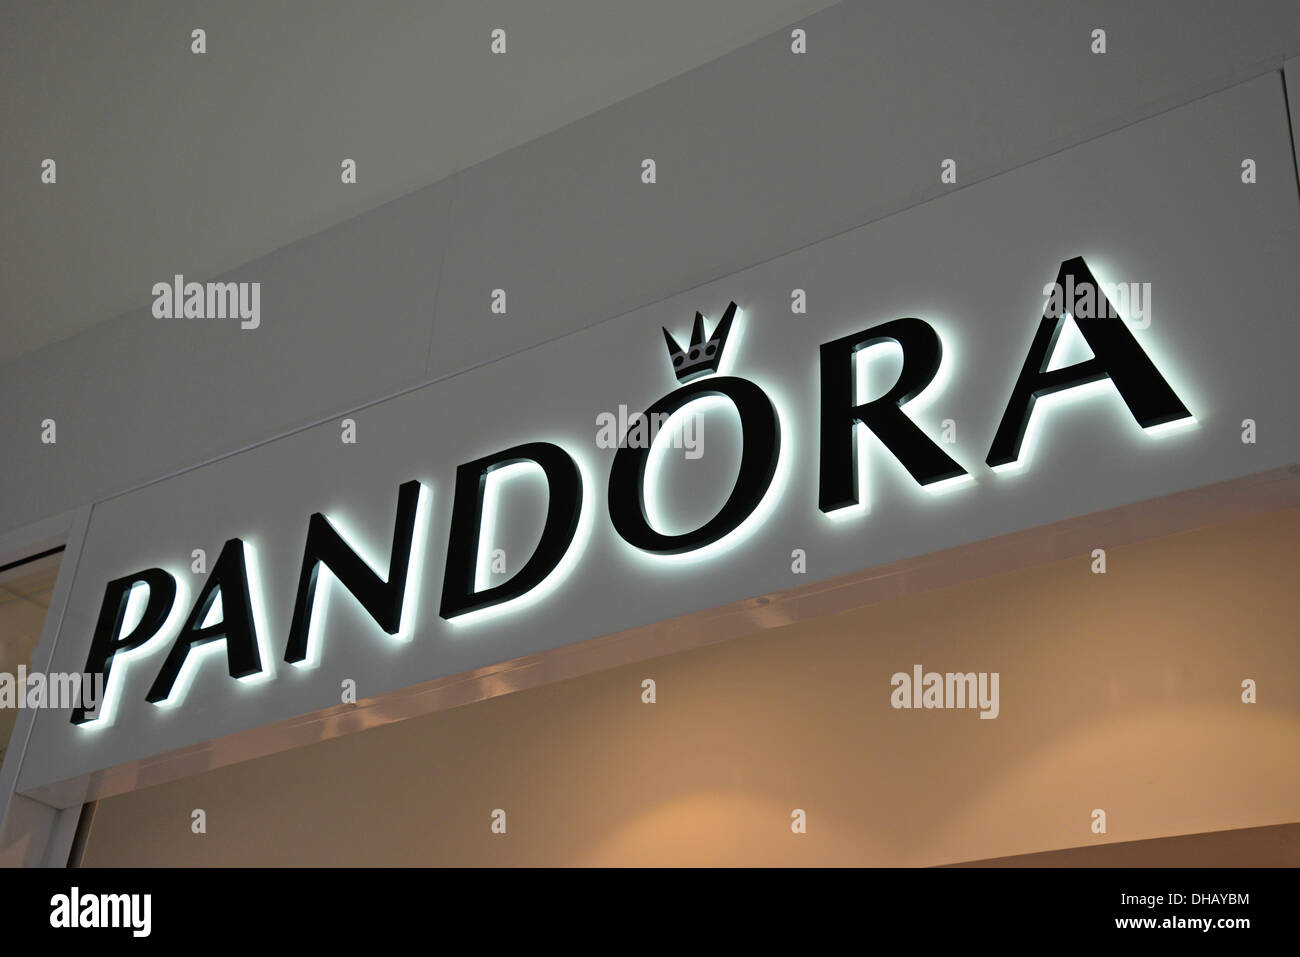 Pandora sign hi-res stock photography and images - Alamy